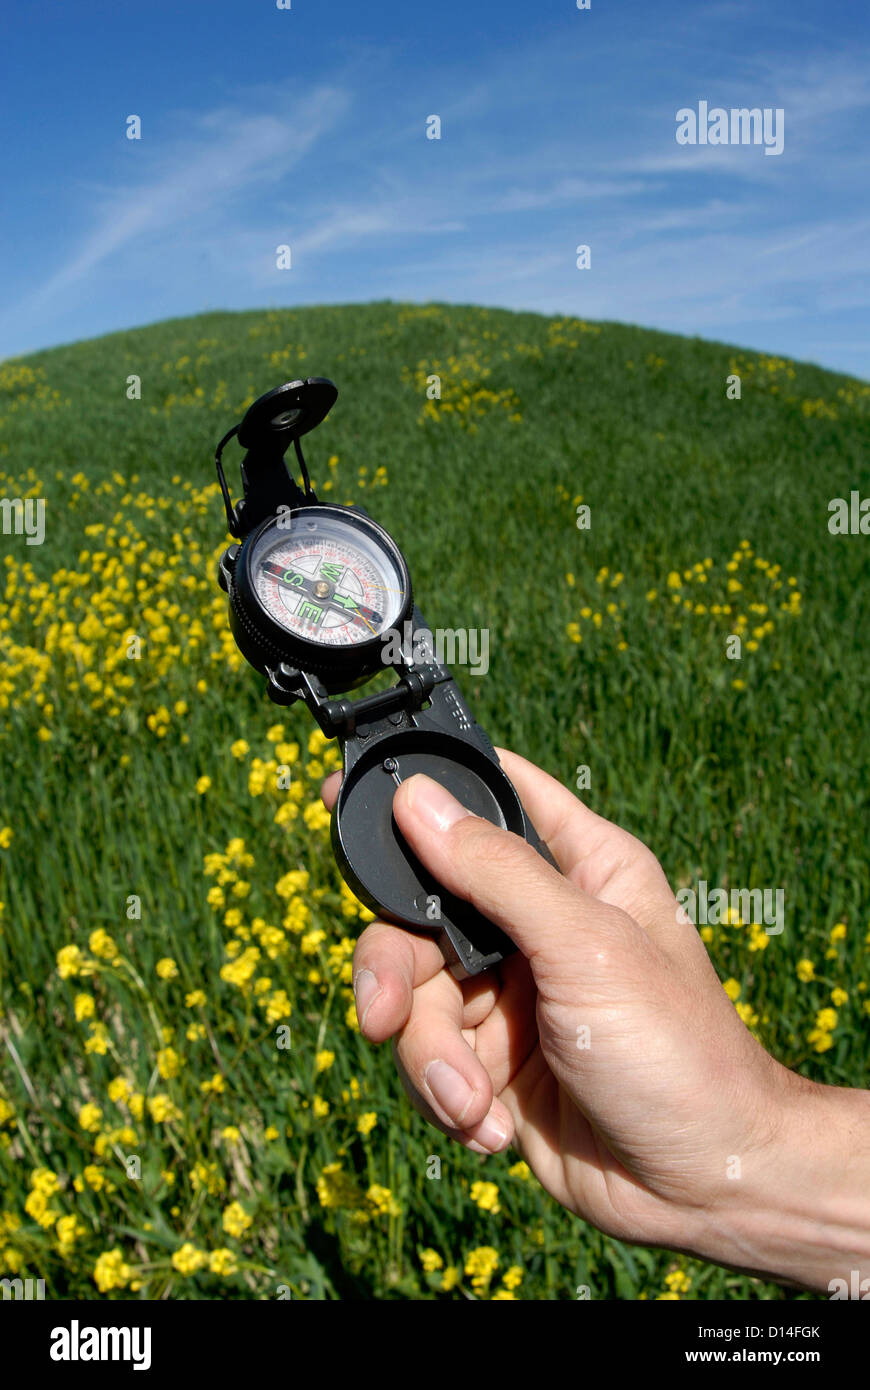 Man's hand holding compass Stock Photo